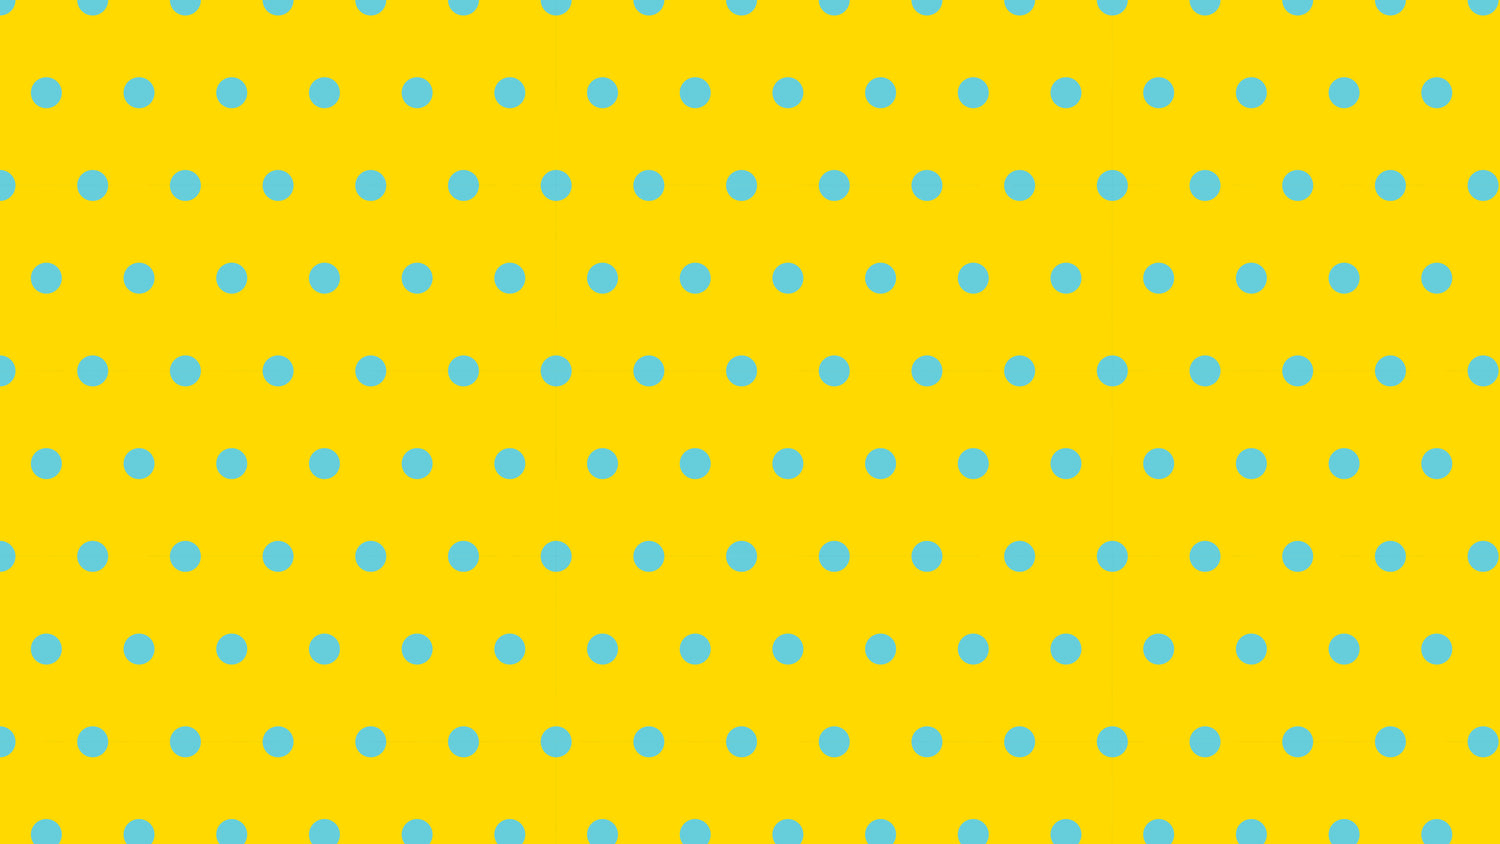 Aqua Dots on Yellow